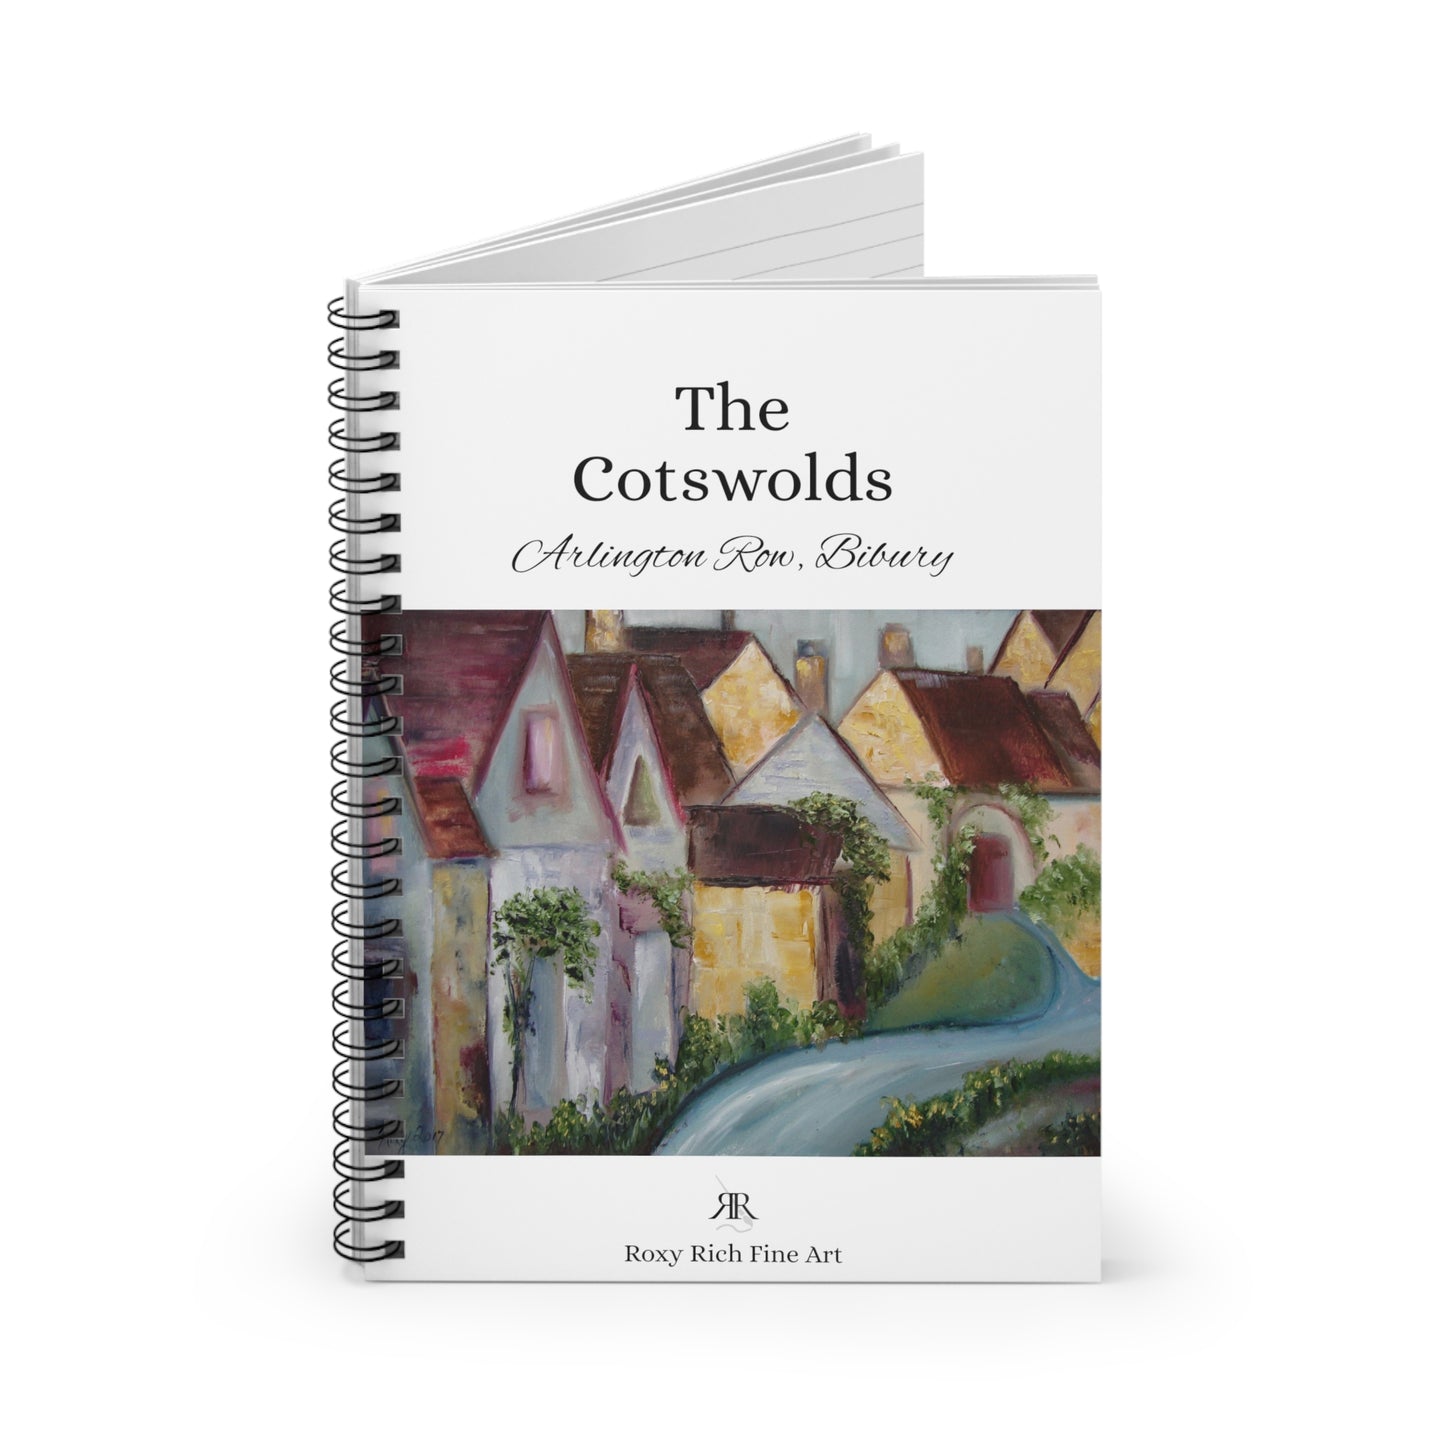 Arlington Row Bibury "The Cotswolds" Spiral Notebook